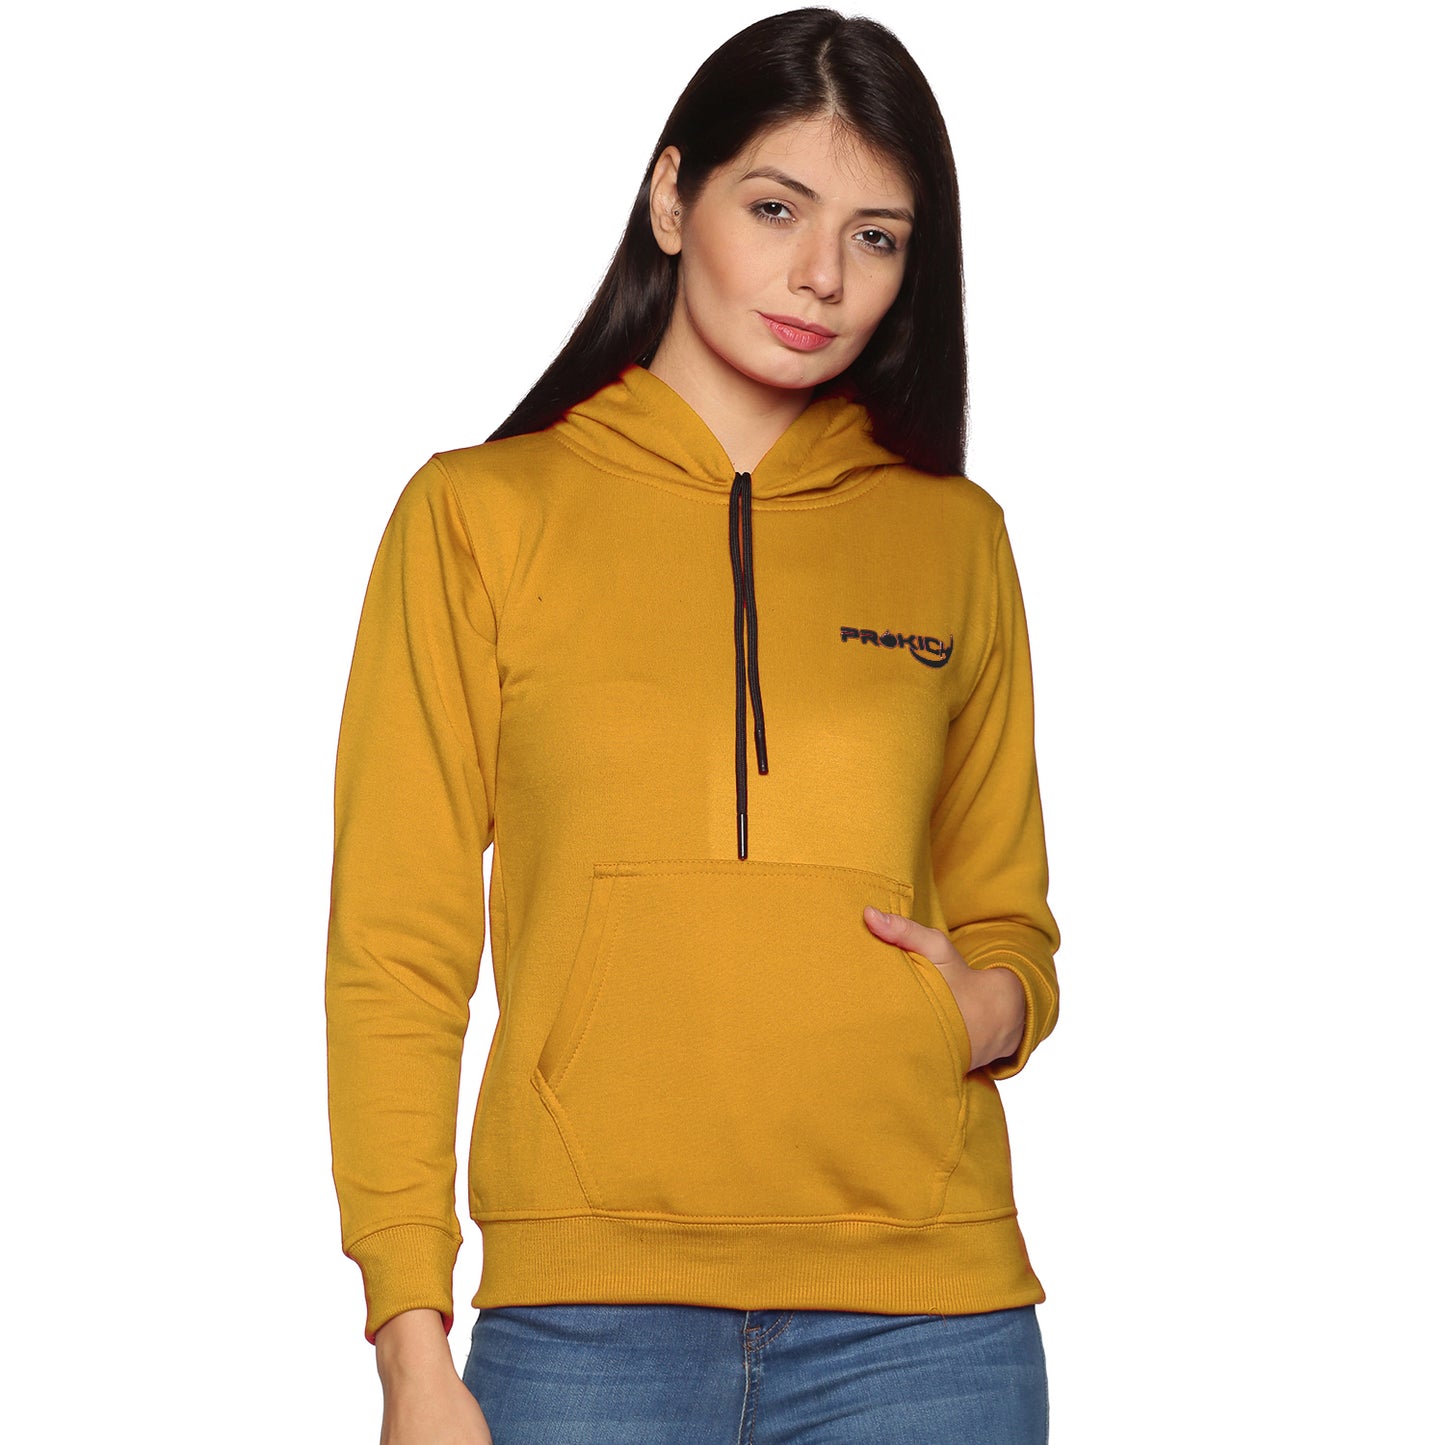 Prokick Sports Women Hooded Sweat Shirt , Yellow - Best Price online Prokicksports.com